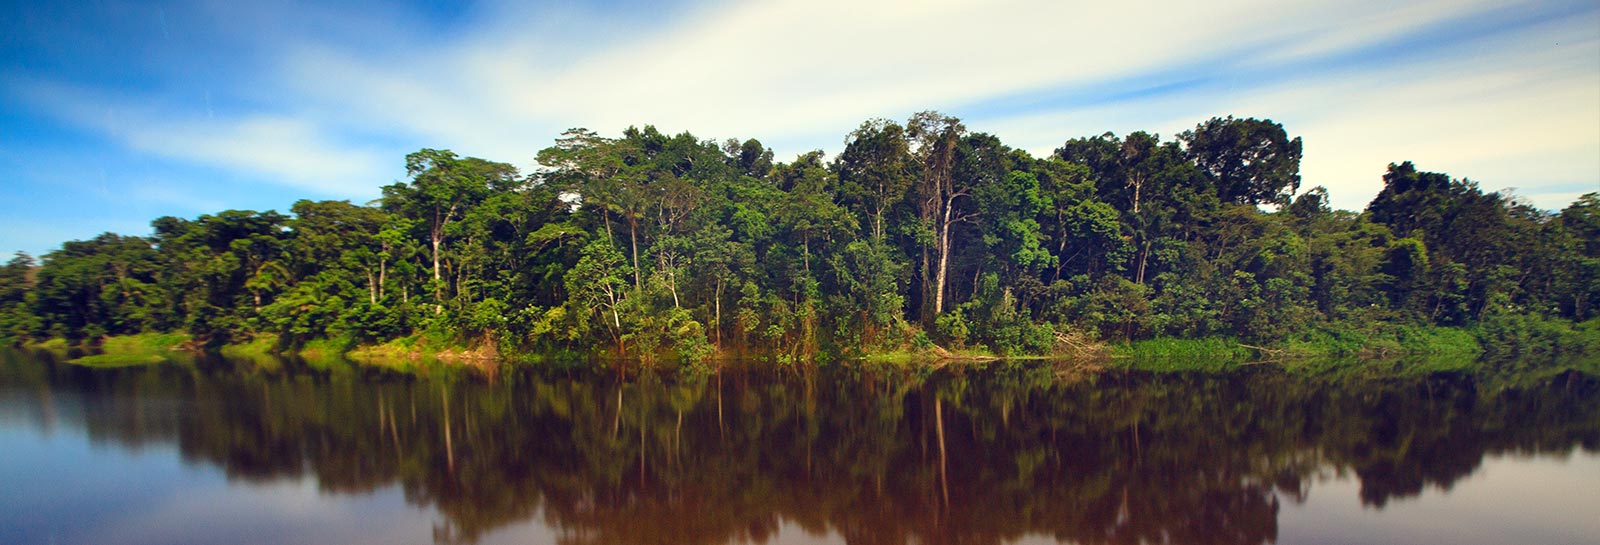 Le fleuve Amazone. Photo : Getty/Wild Horse Photography